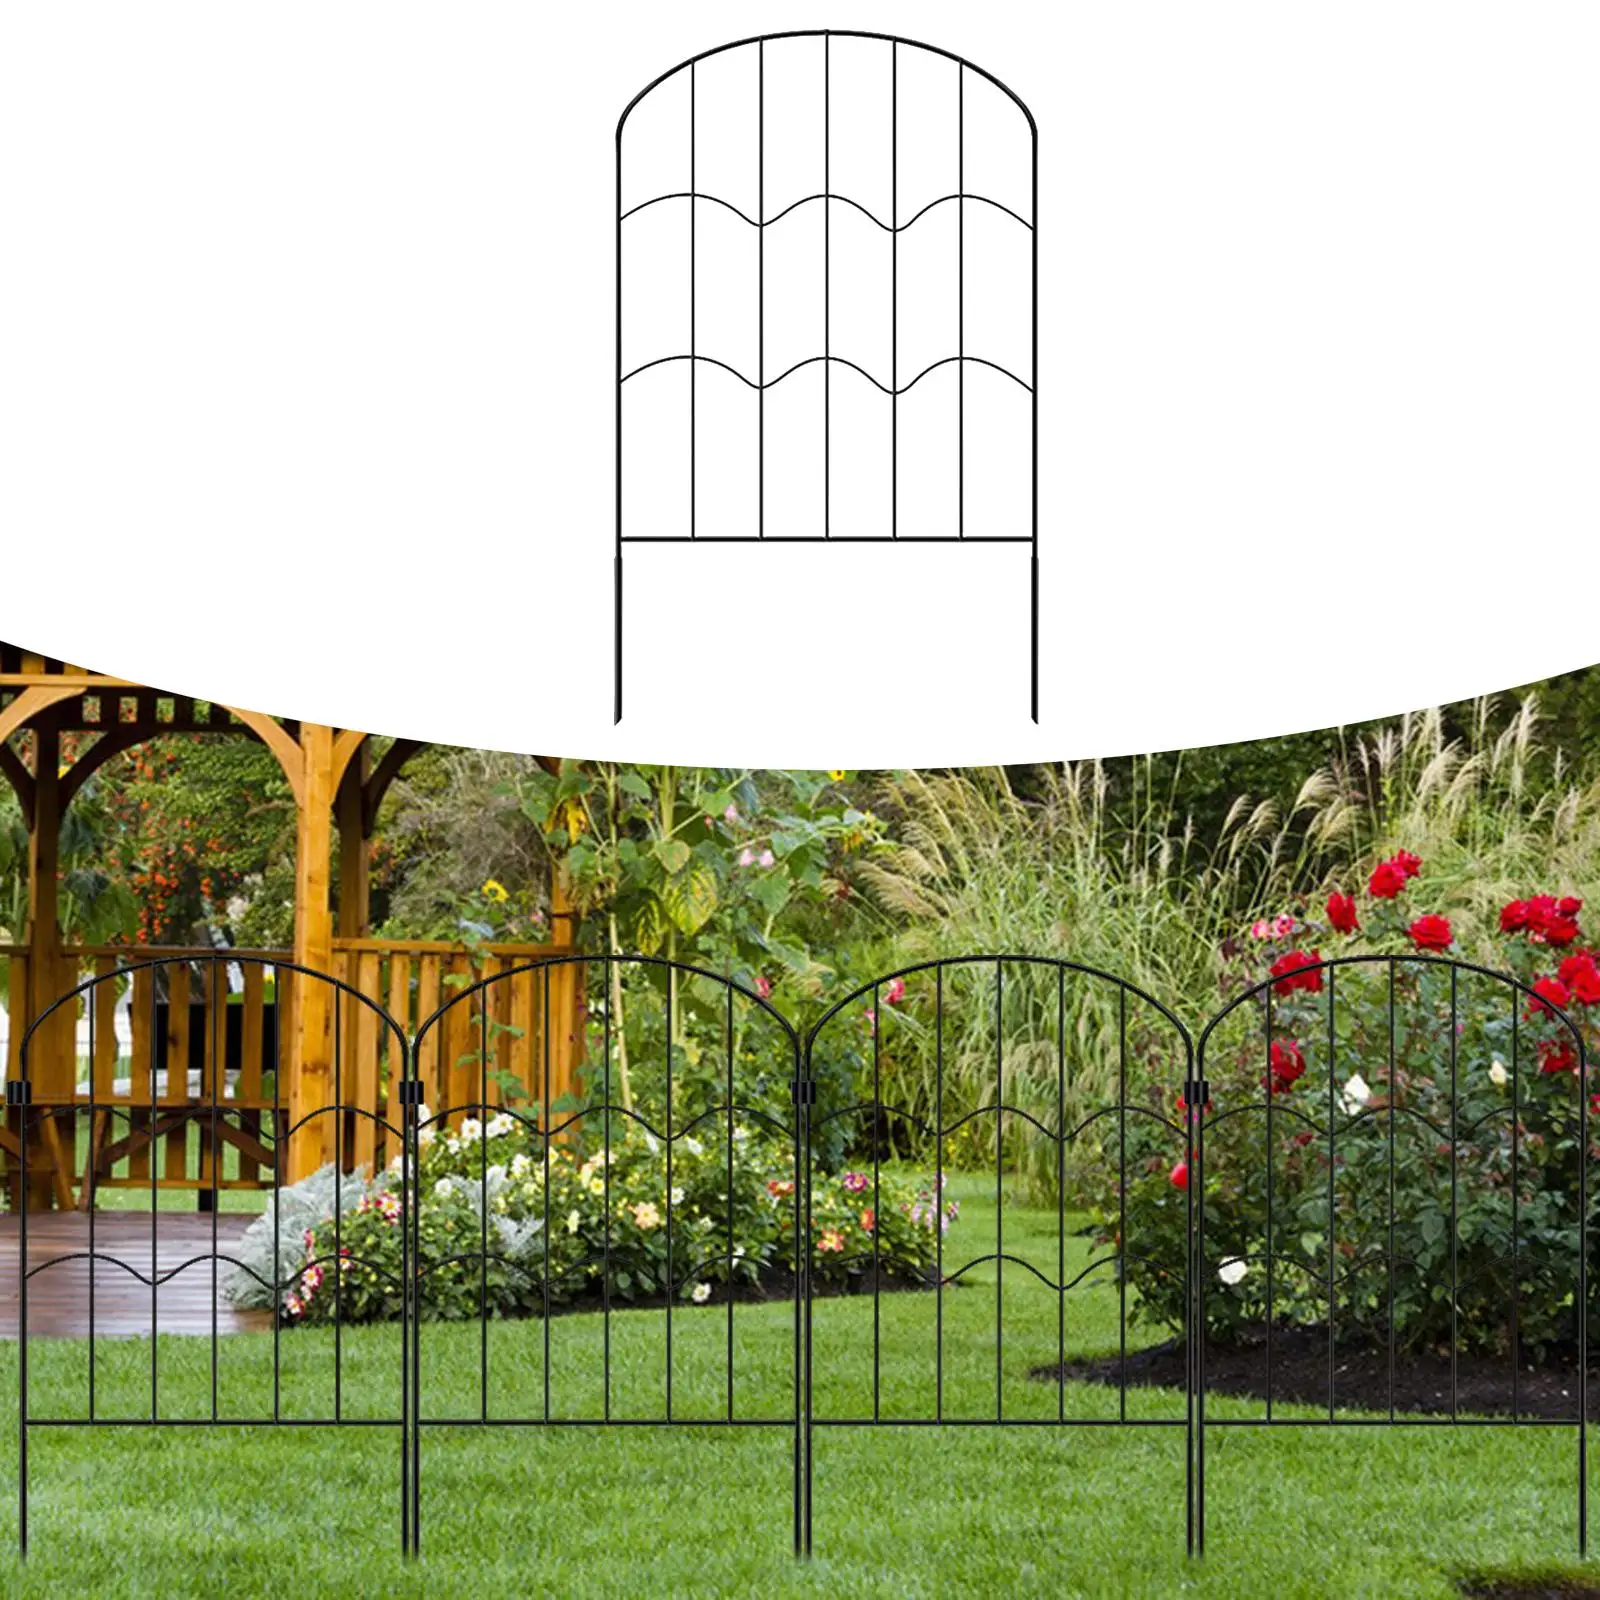 Garden Fence Panel Picket Landscape Tall Metal Border Edging Animal Barrier for Outdoor Privacy Backyard Restaurant Outside